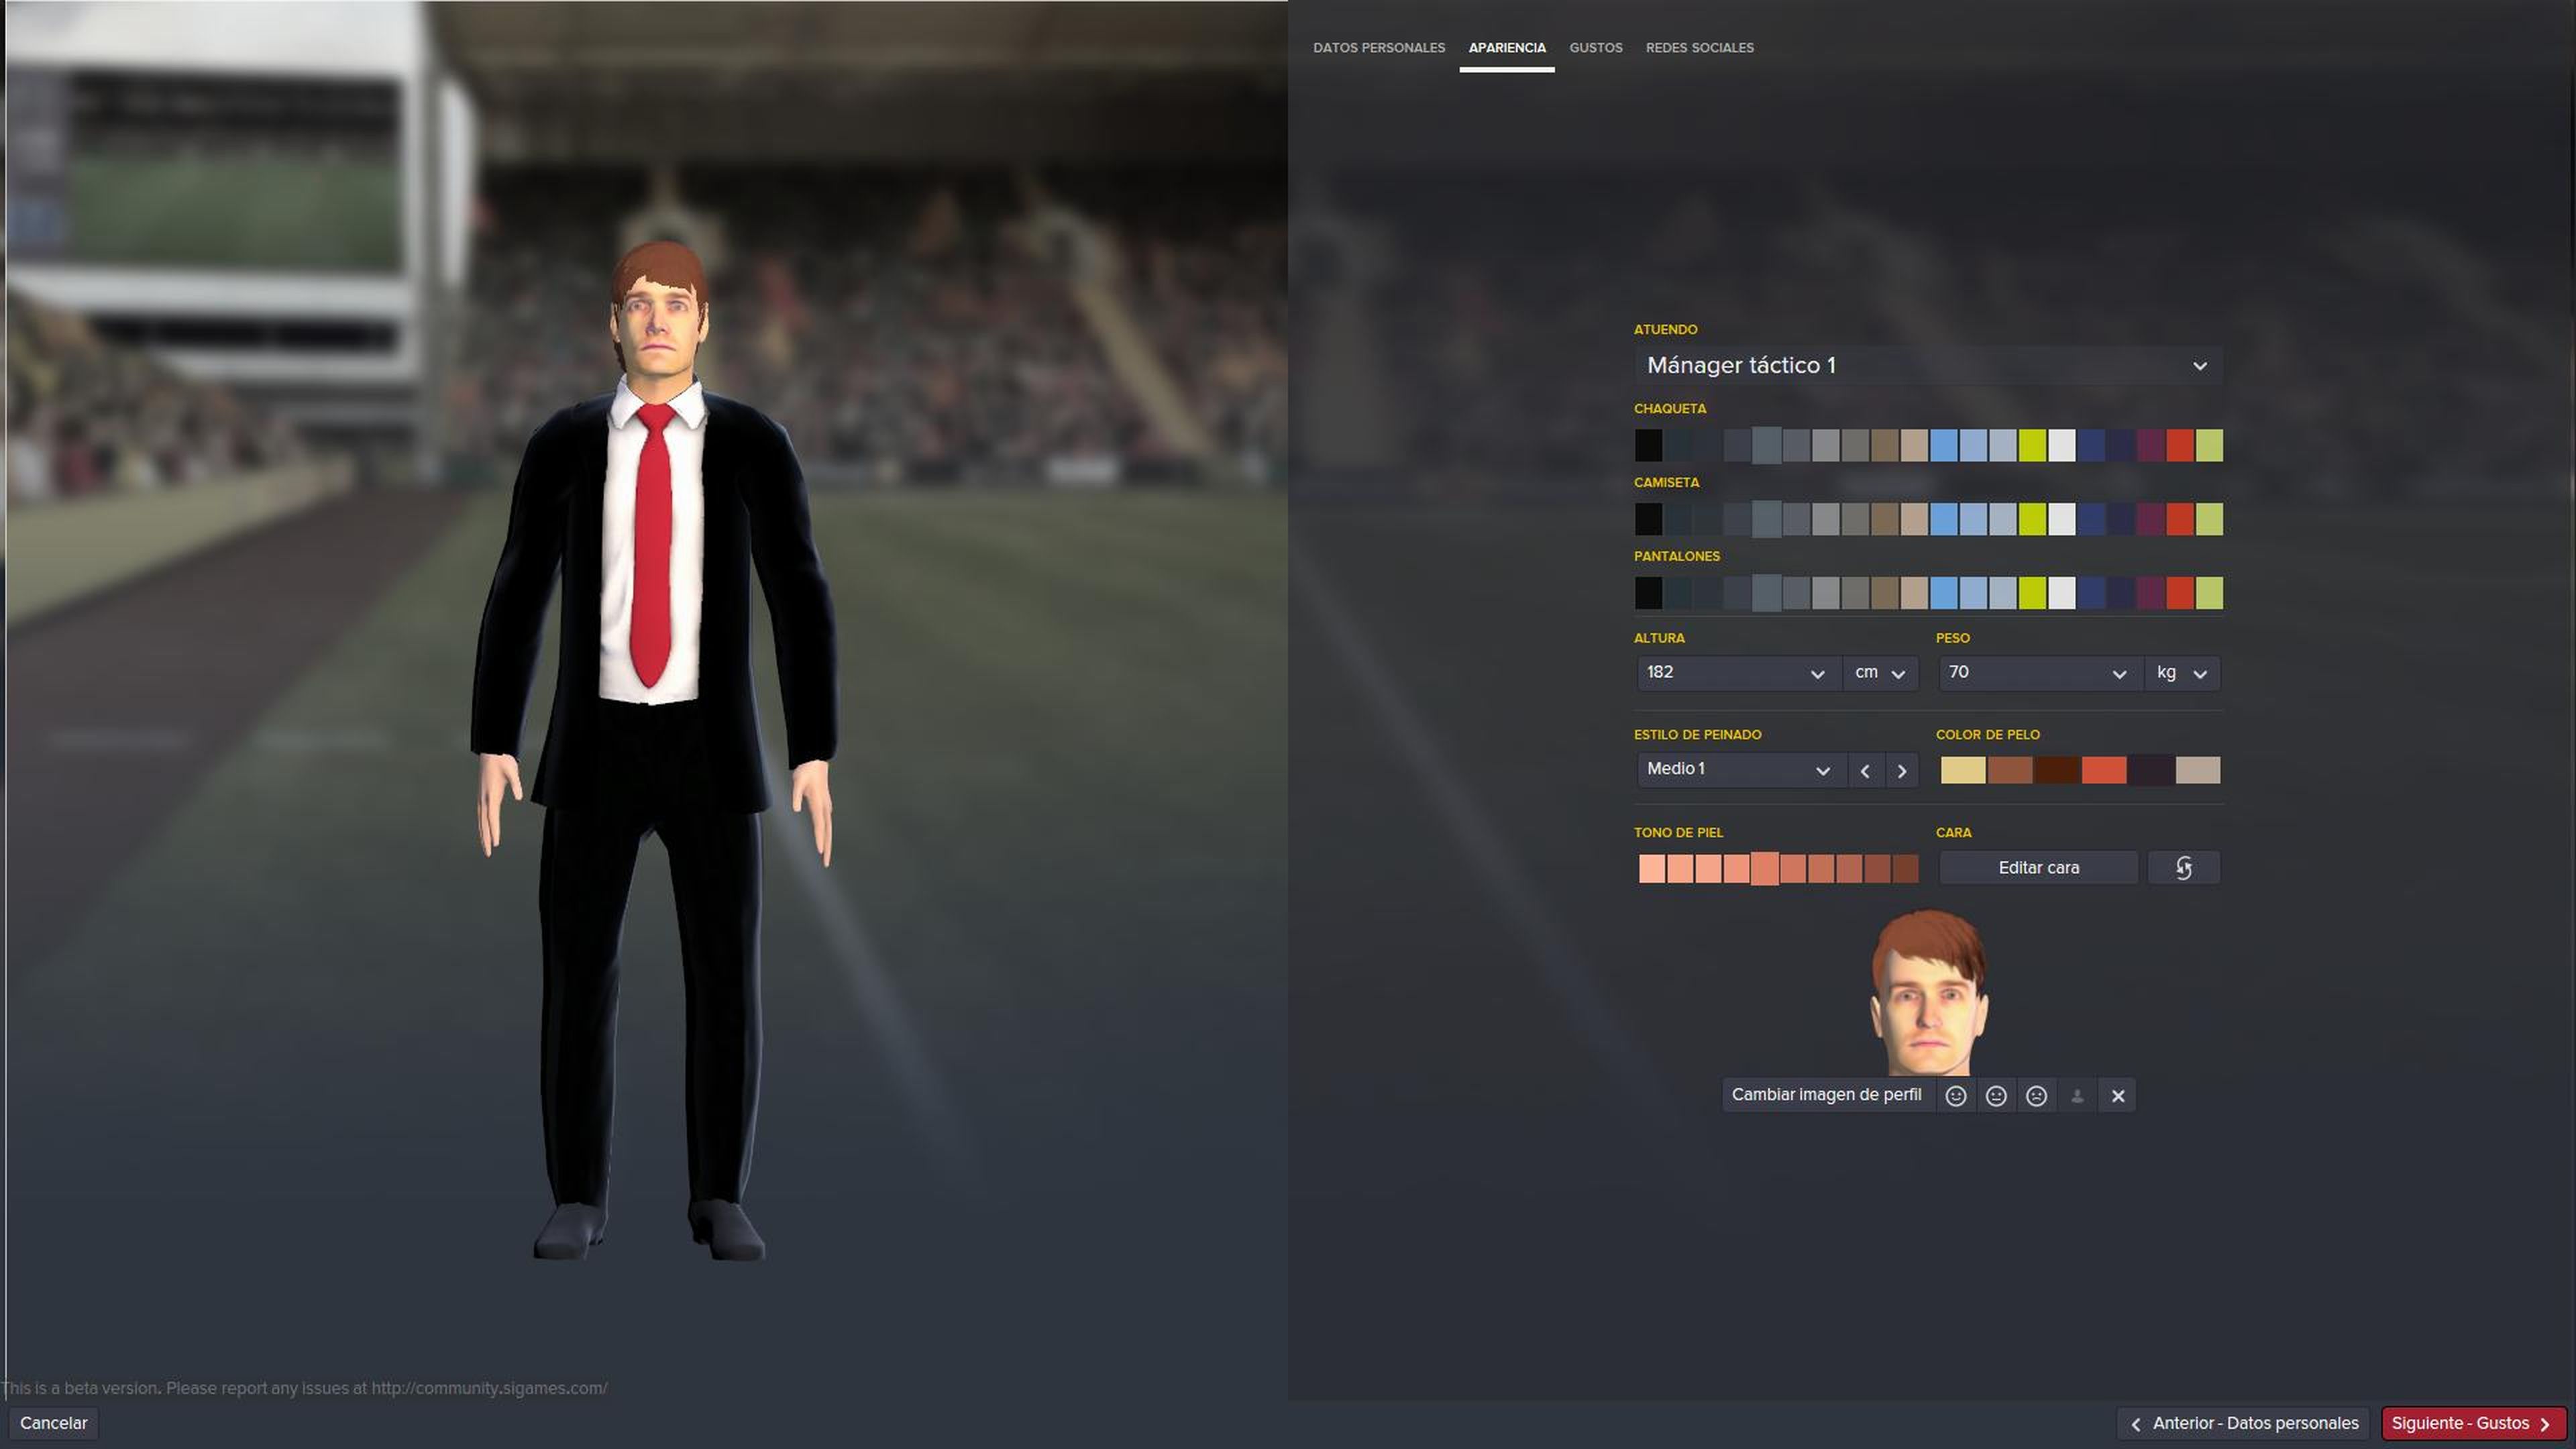 Análisis de Football Manager 2016 para PC